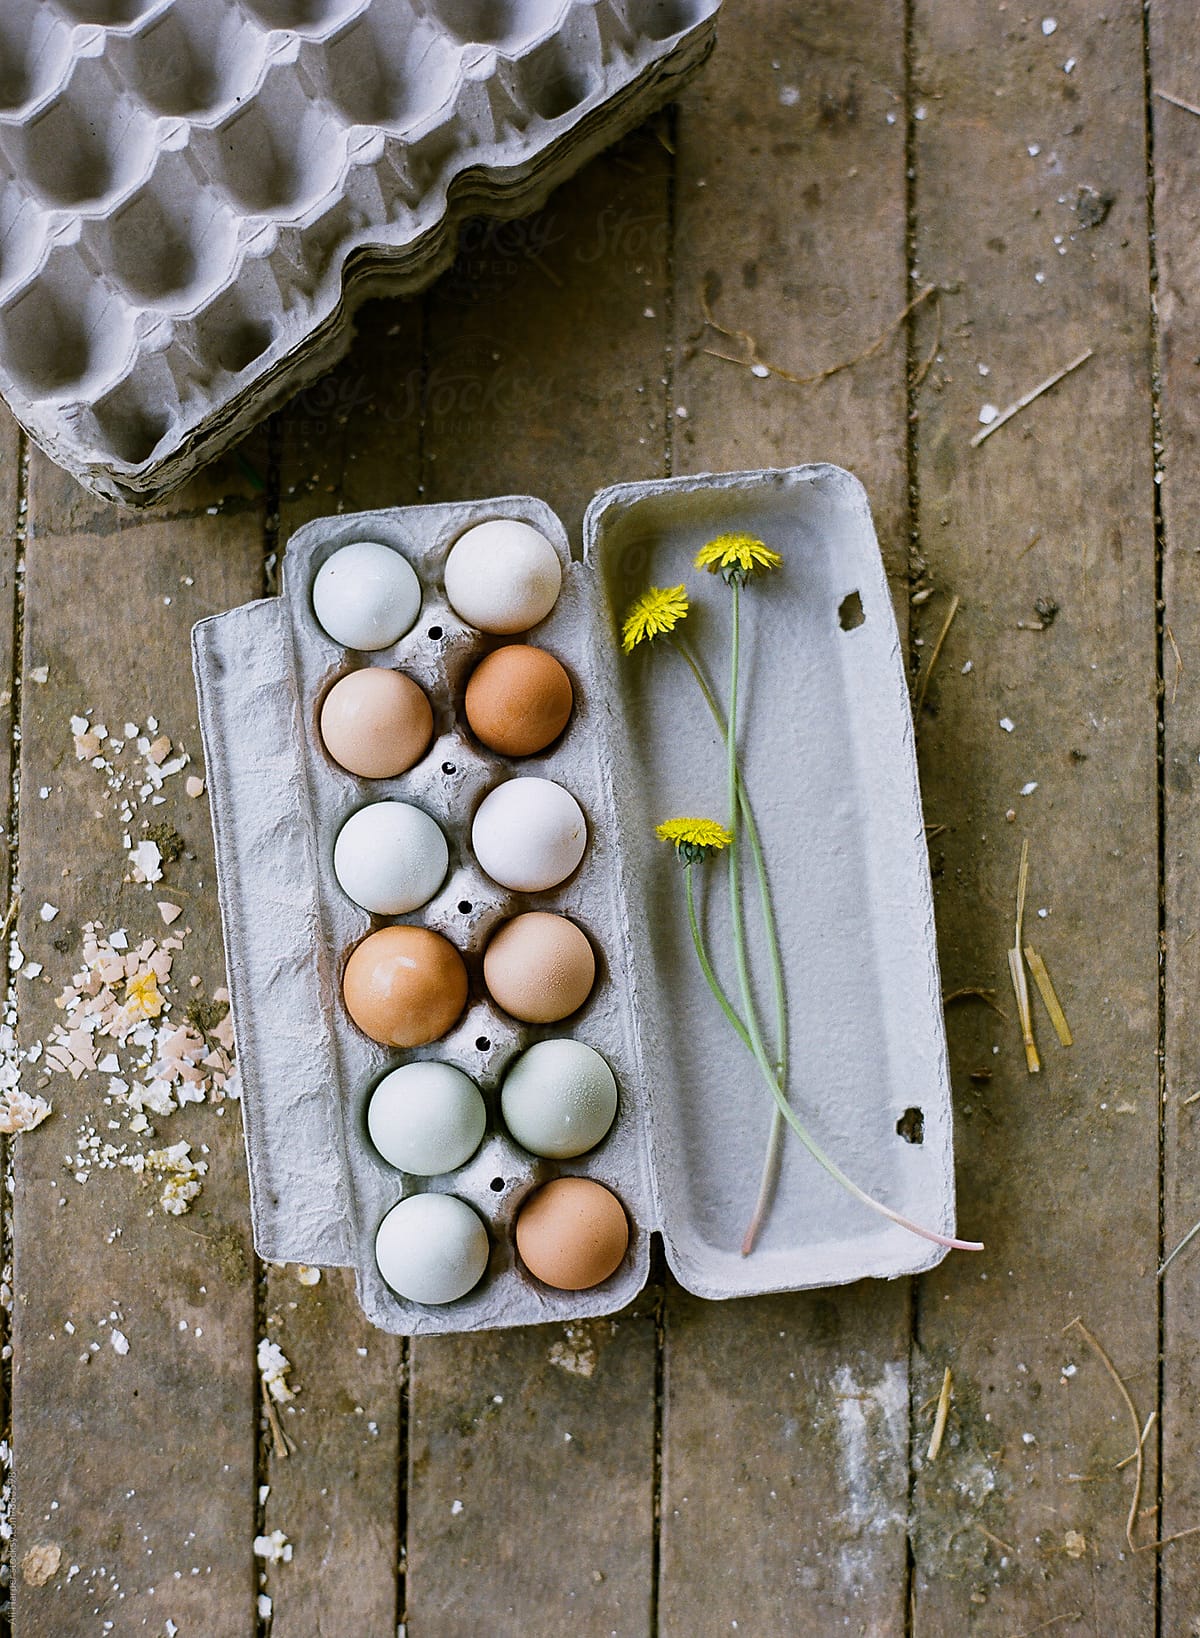 Colorful free-range, organic chicken eggs in carton